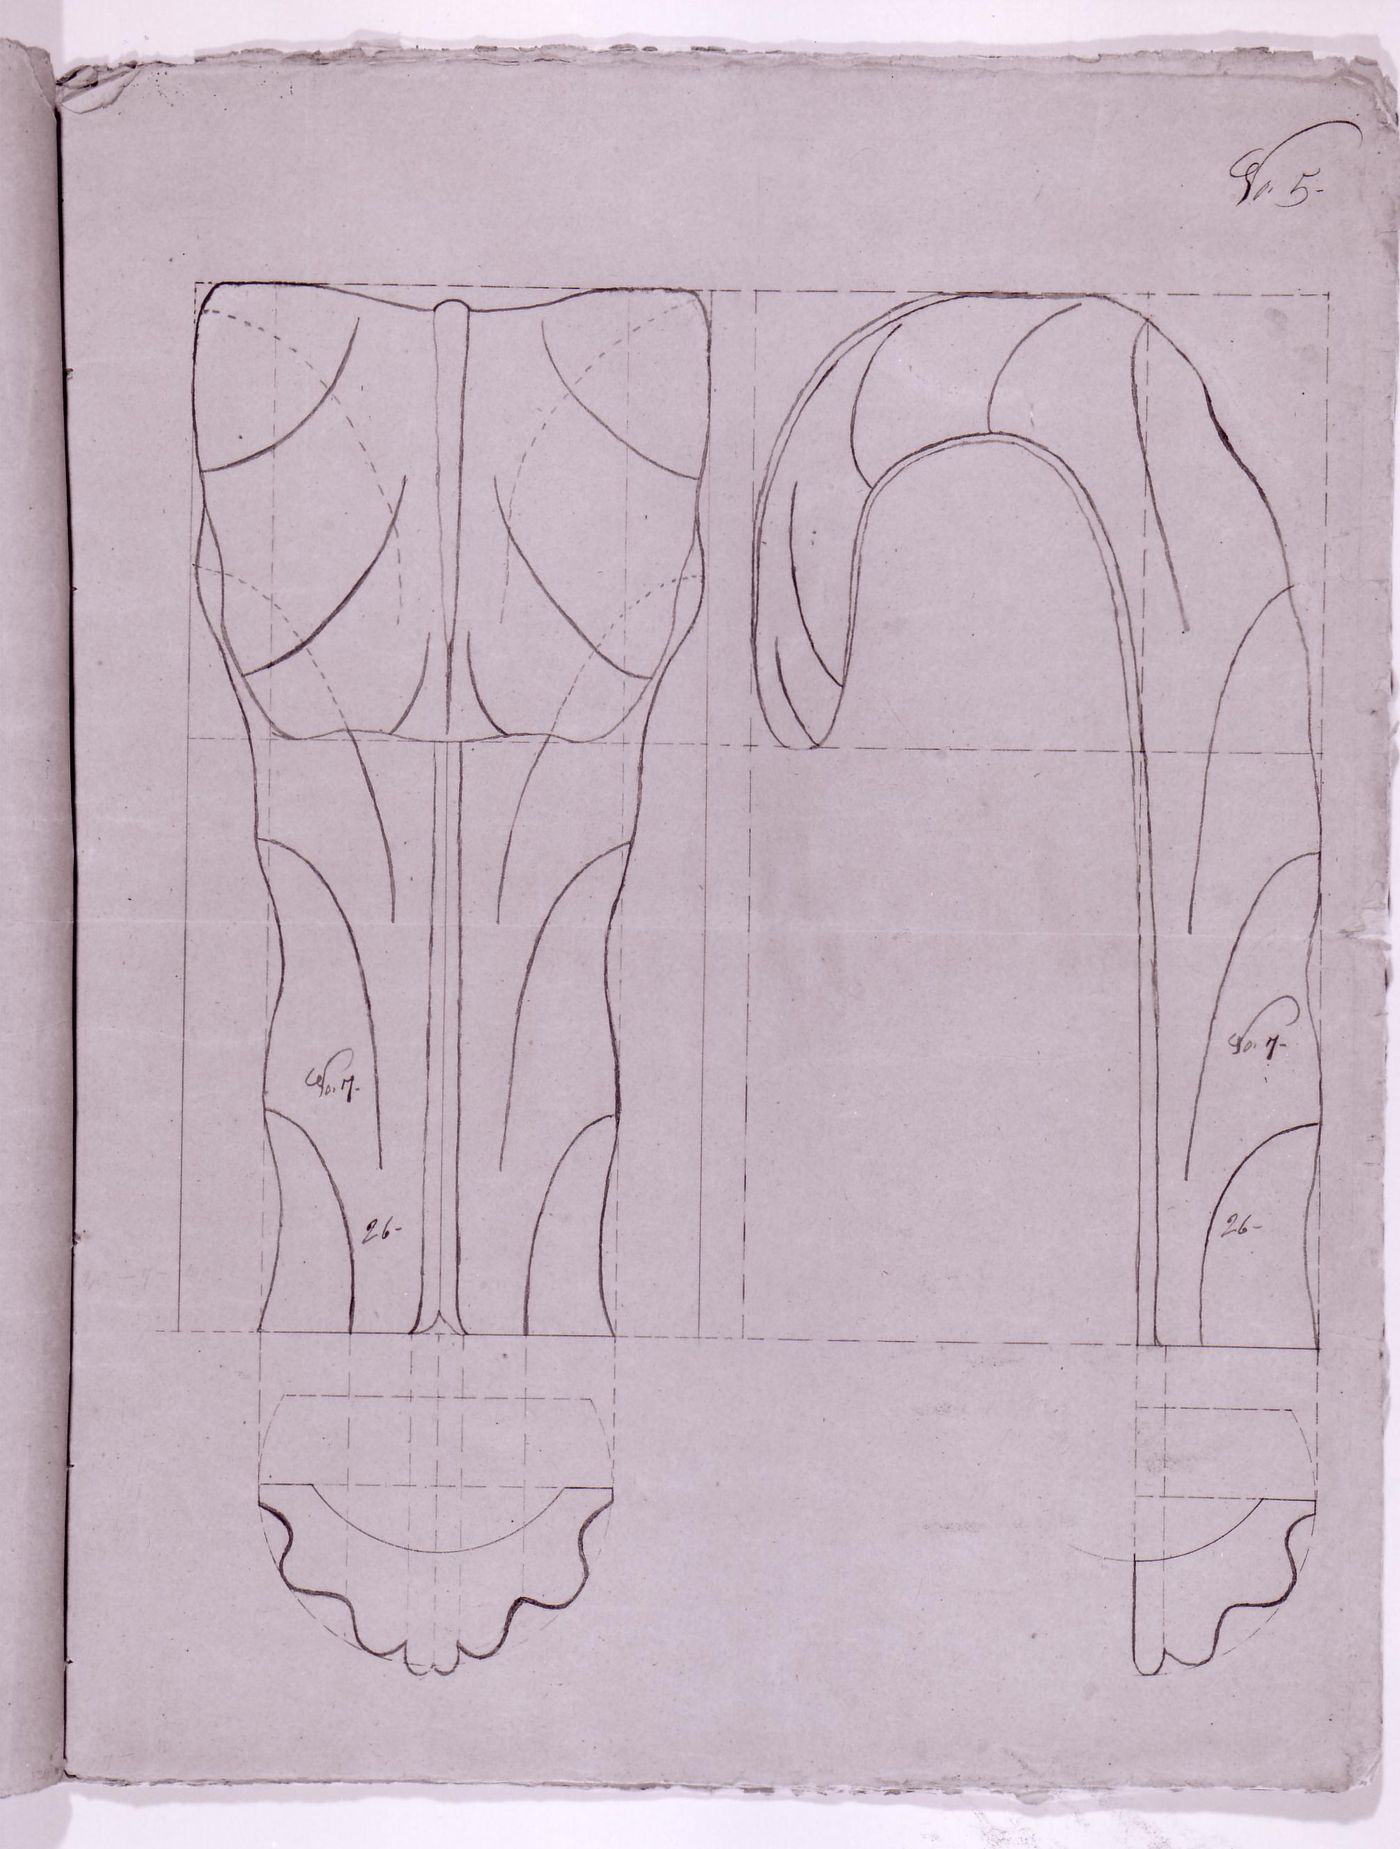 Plans and elevations for decorative details for the high altar for Notre-Dame de Montréal